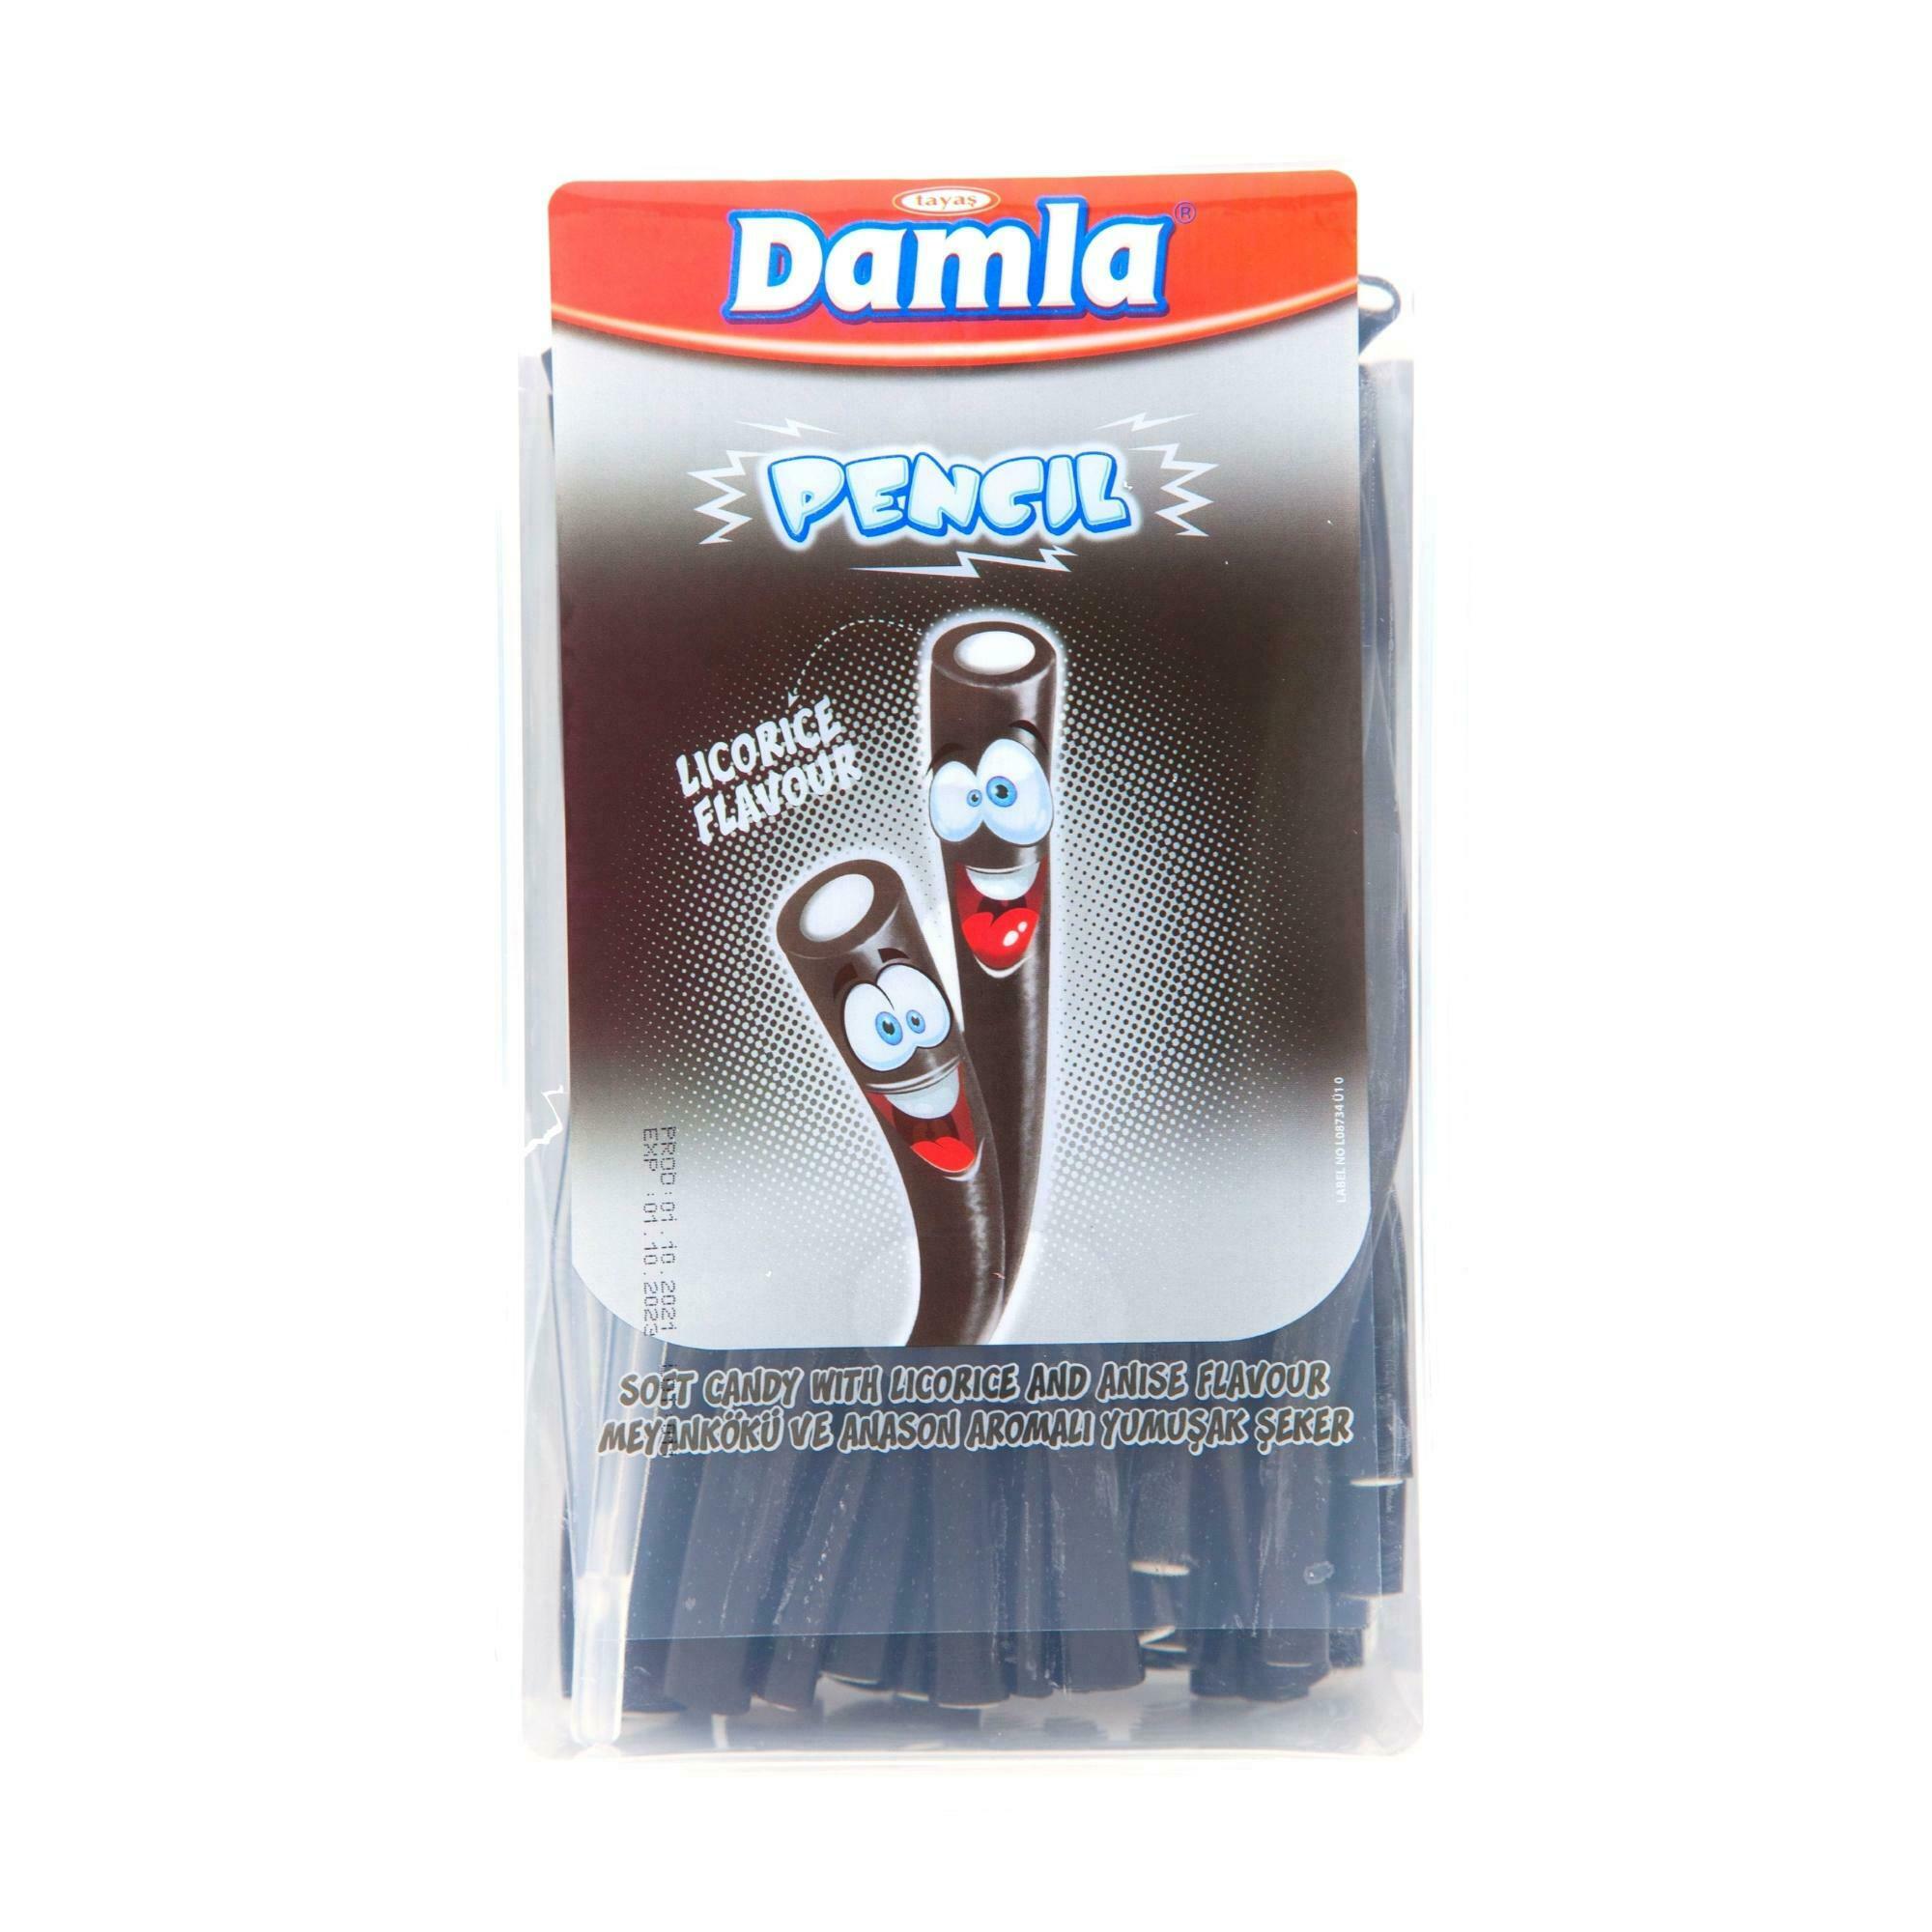 Damla Pencil Licorice & Anise (960G) - Aytac Foods